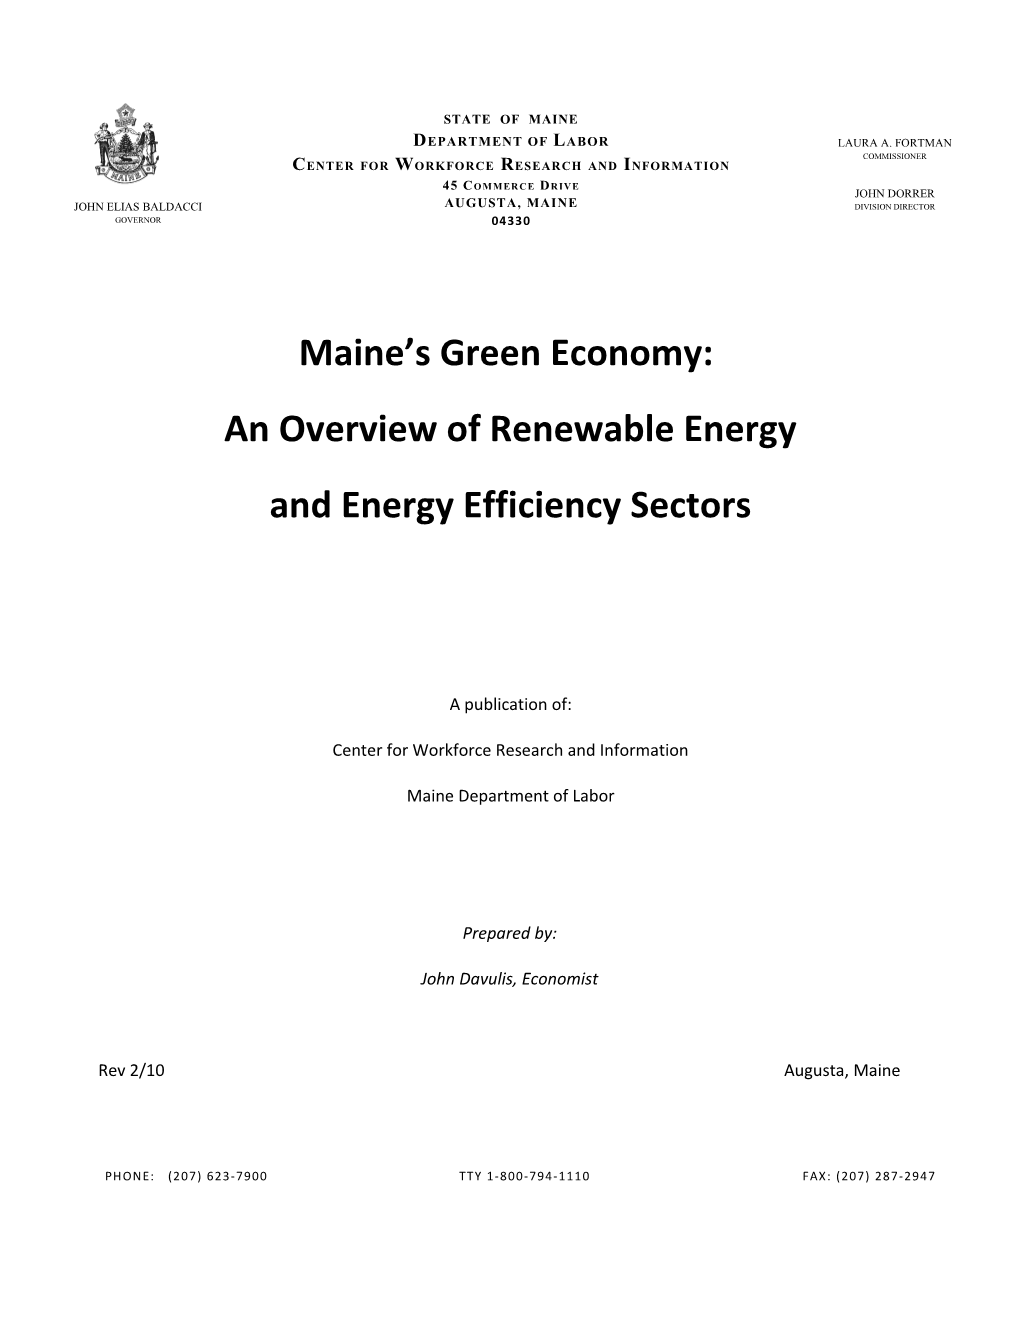 Maine S Green Economy: the Renewable Energy and Energy Efficiency Sectors